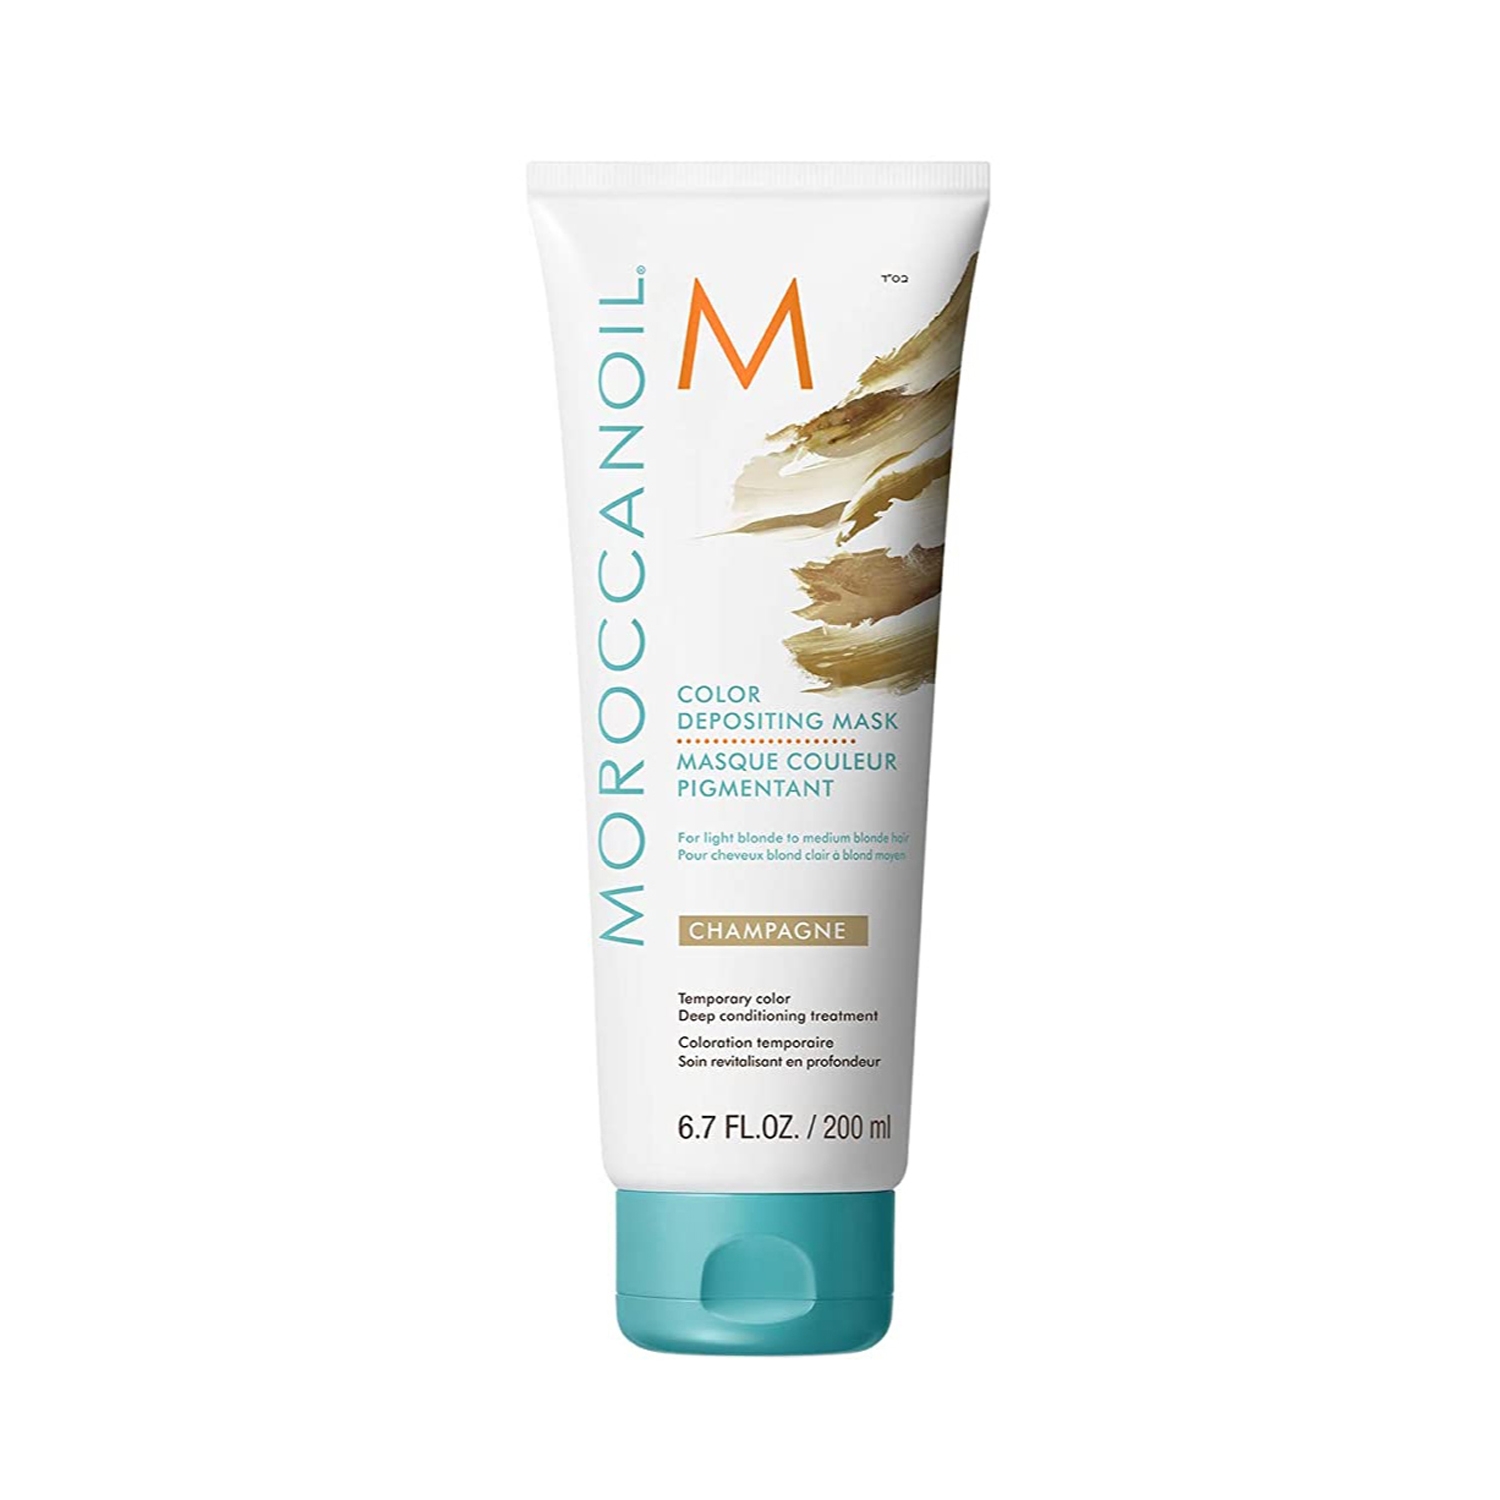 Moroccanoil | Moroccanoil Depositing Mask Hair Cream - Champagne (200ml)